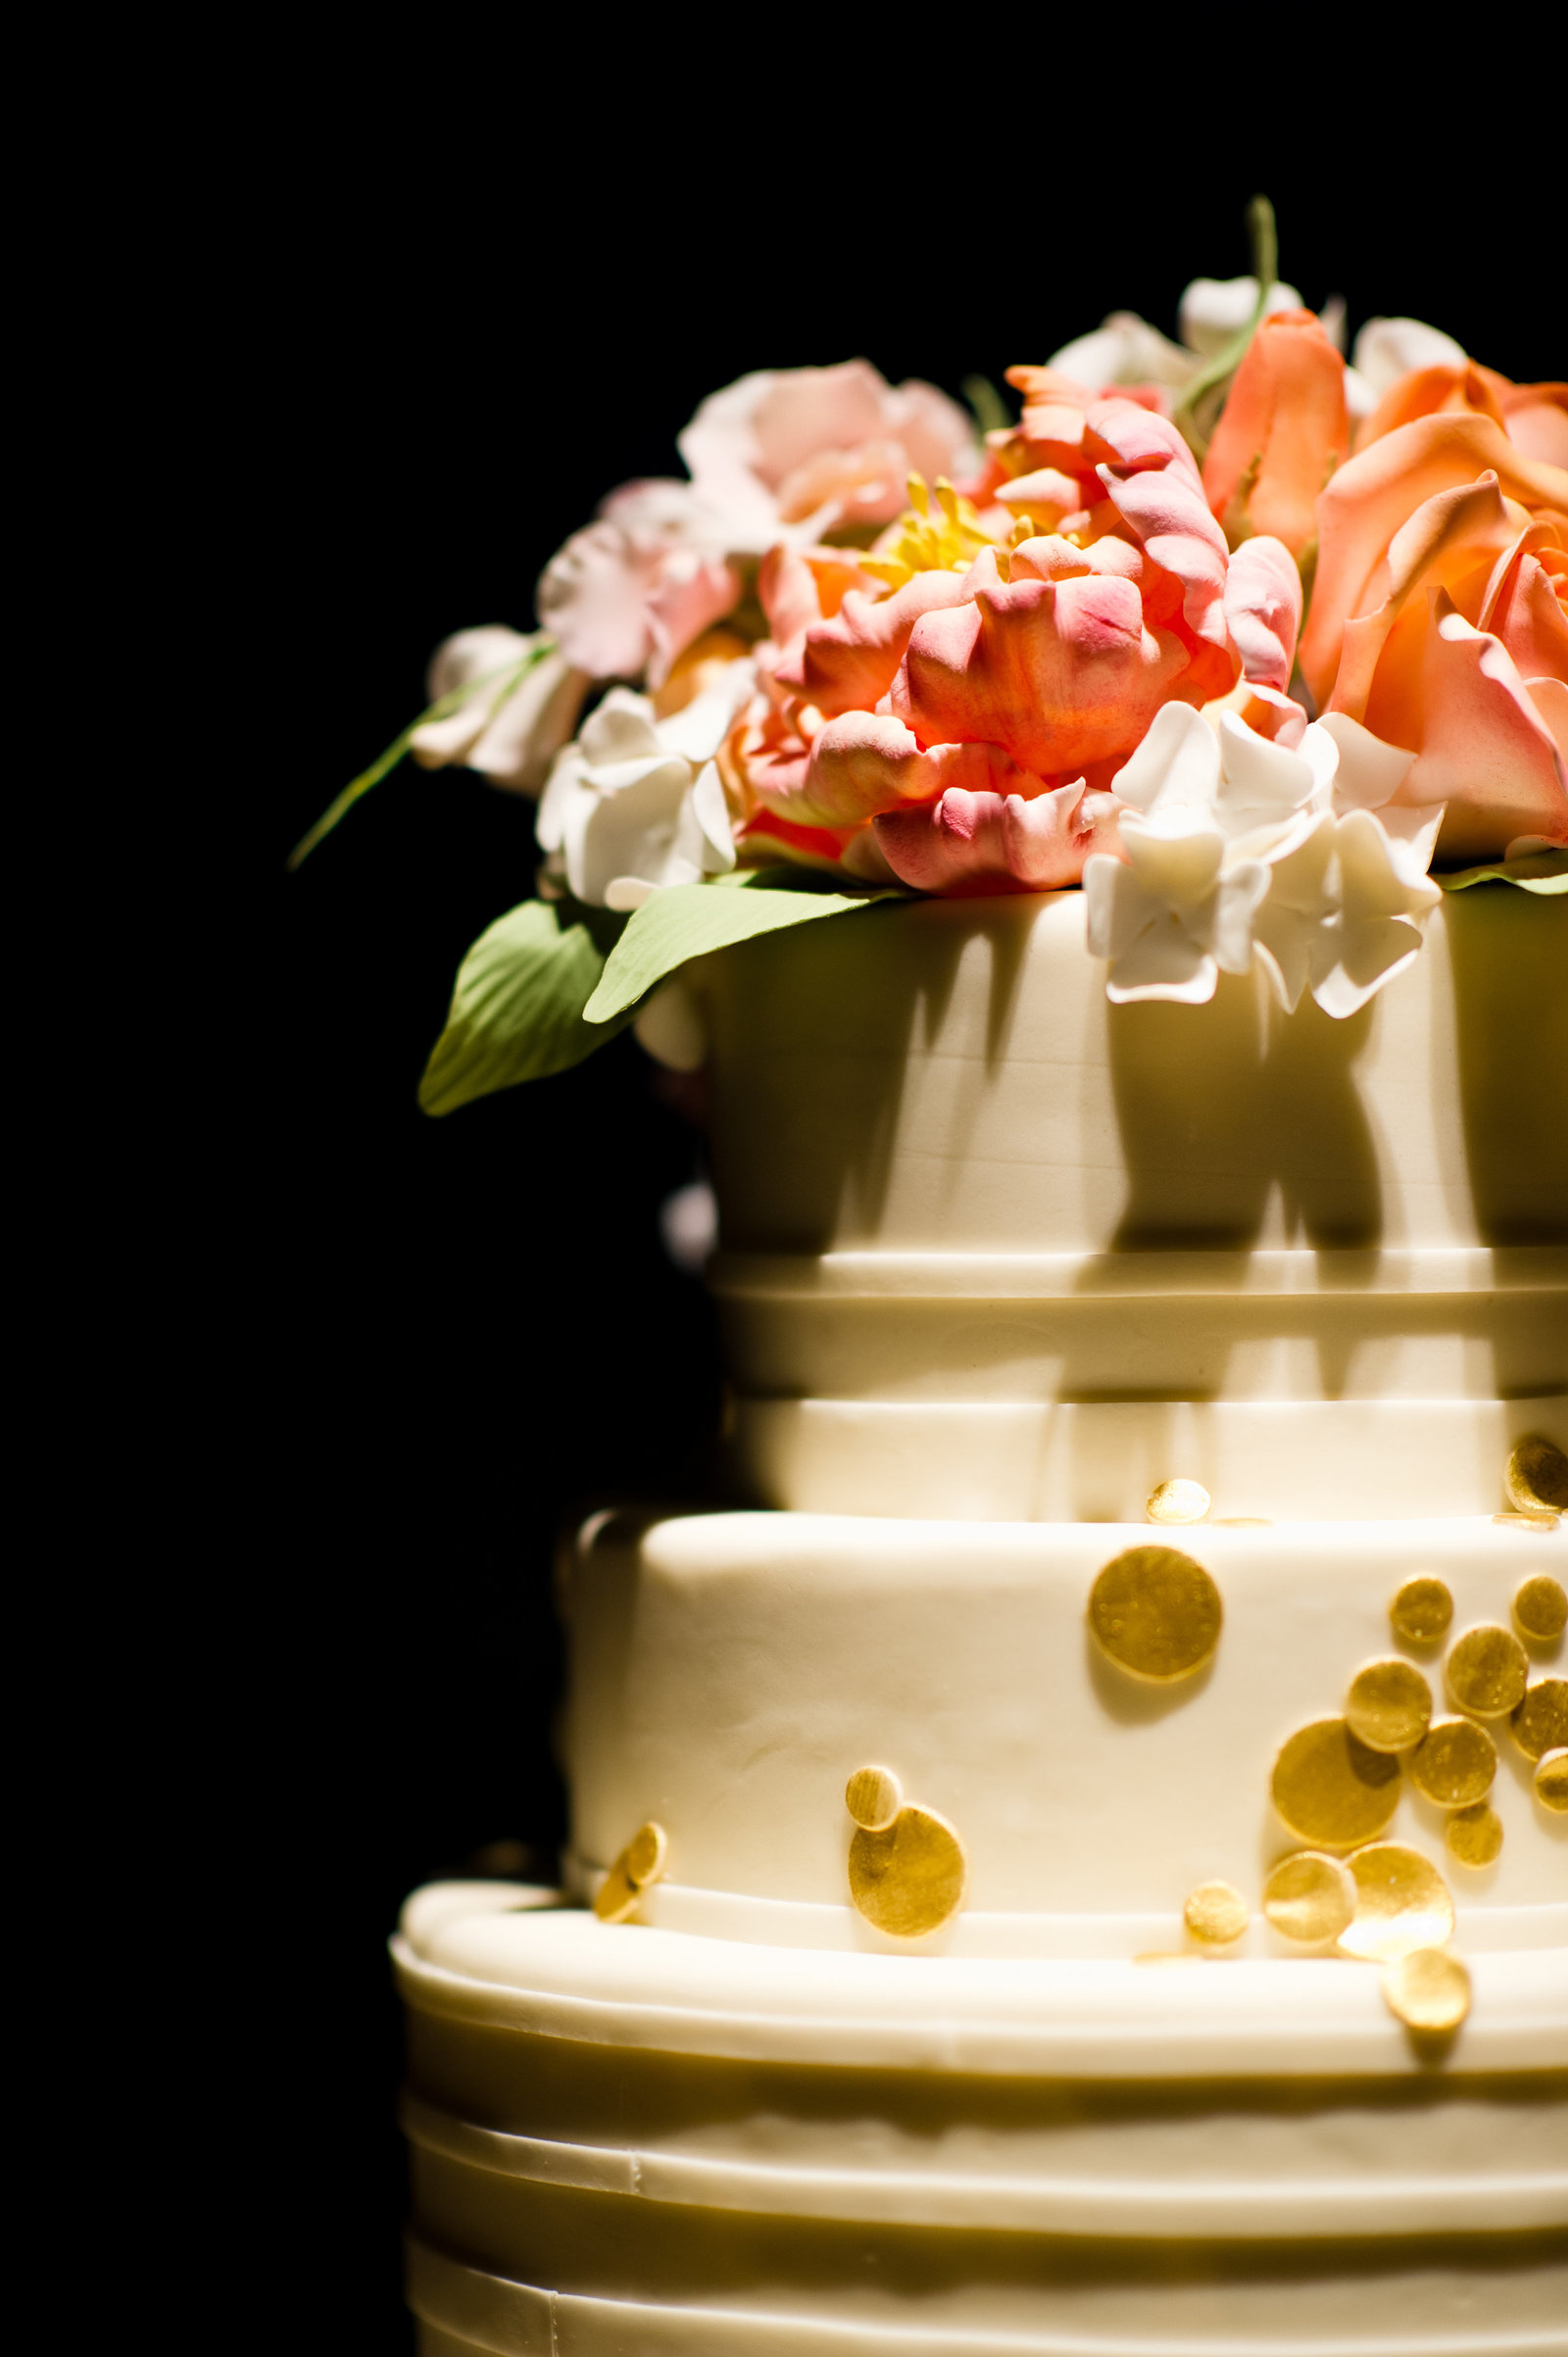 Cake design with sugar flowers by The Cake Studio of Ocean Studio